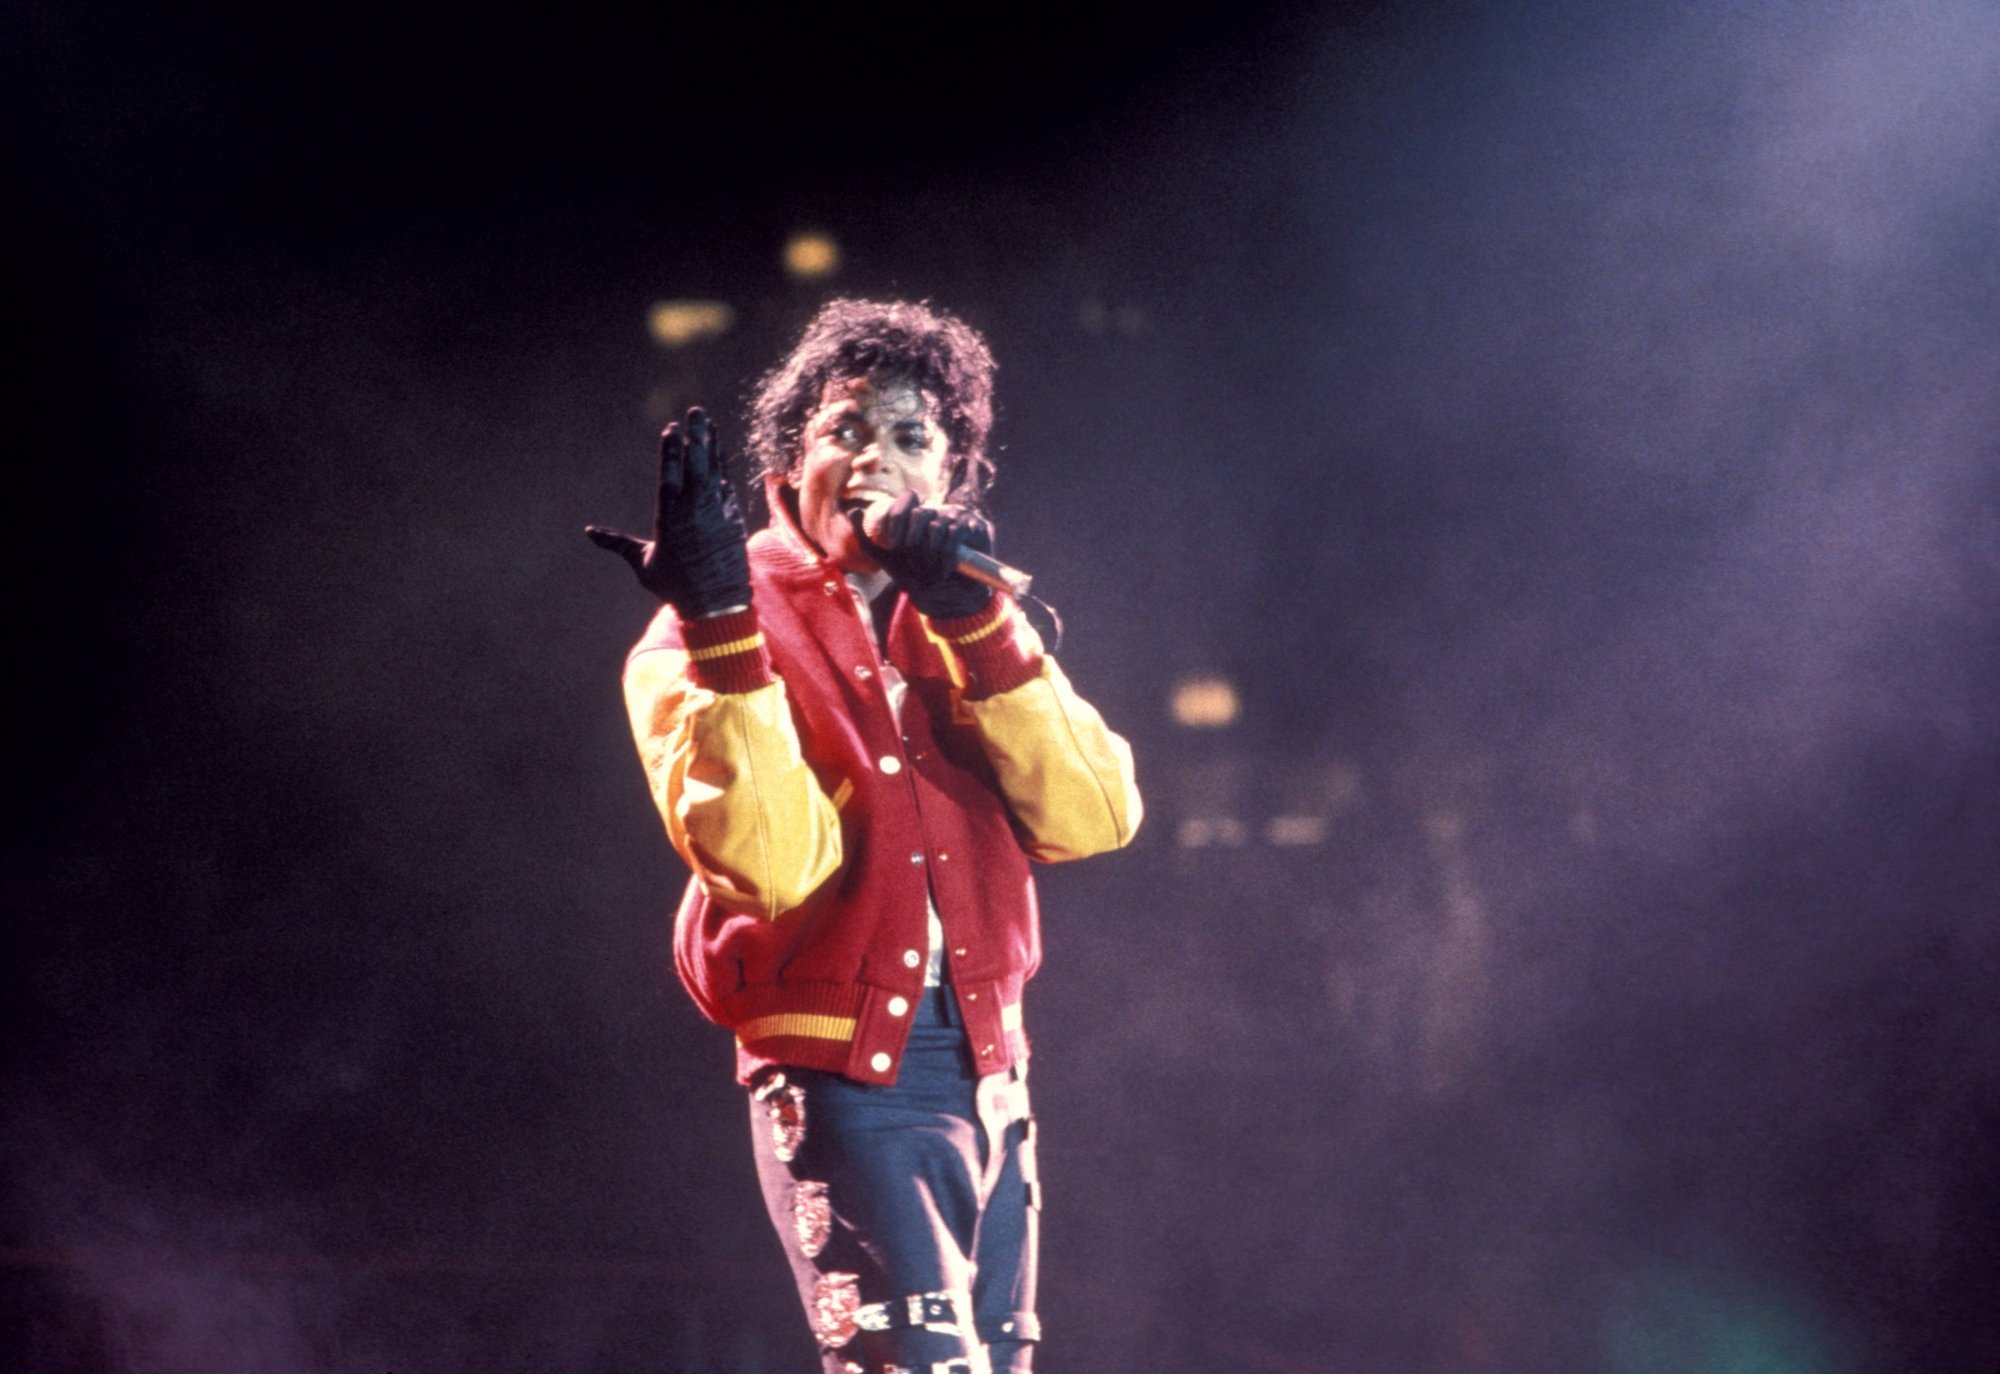 Michael Jackson, en concert, chante 